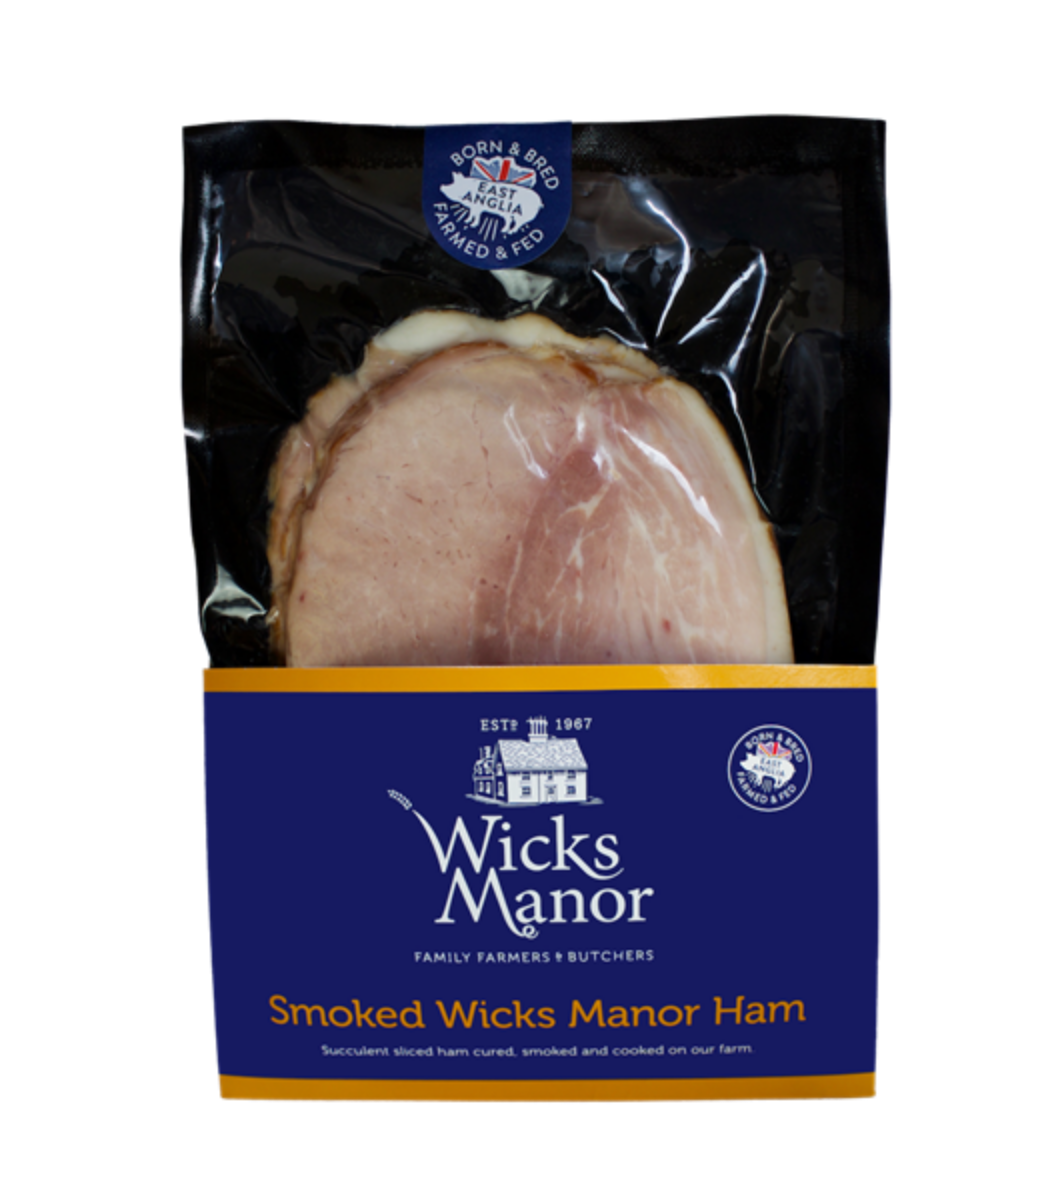 Pack of Smoked Wicks Manor English Sliced Ham - 200g | Online grocer Sasha